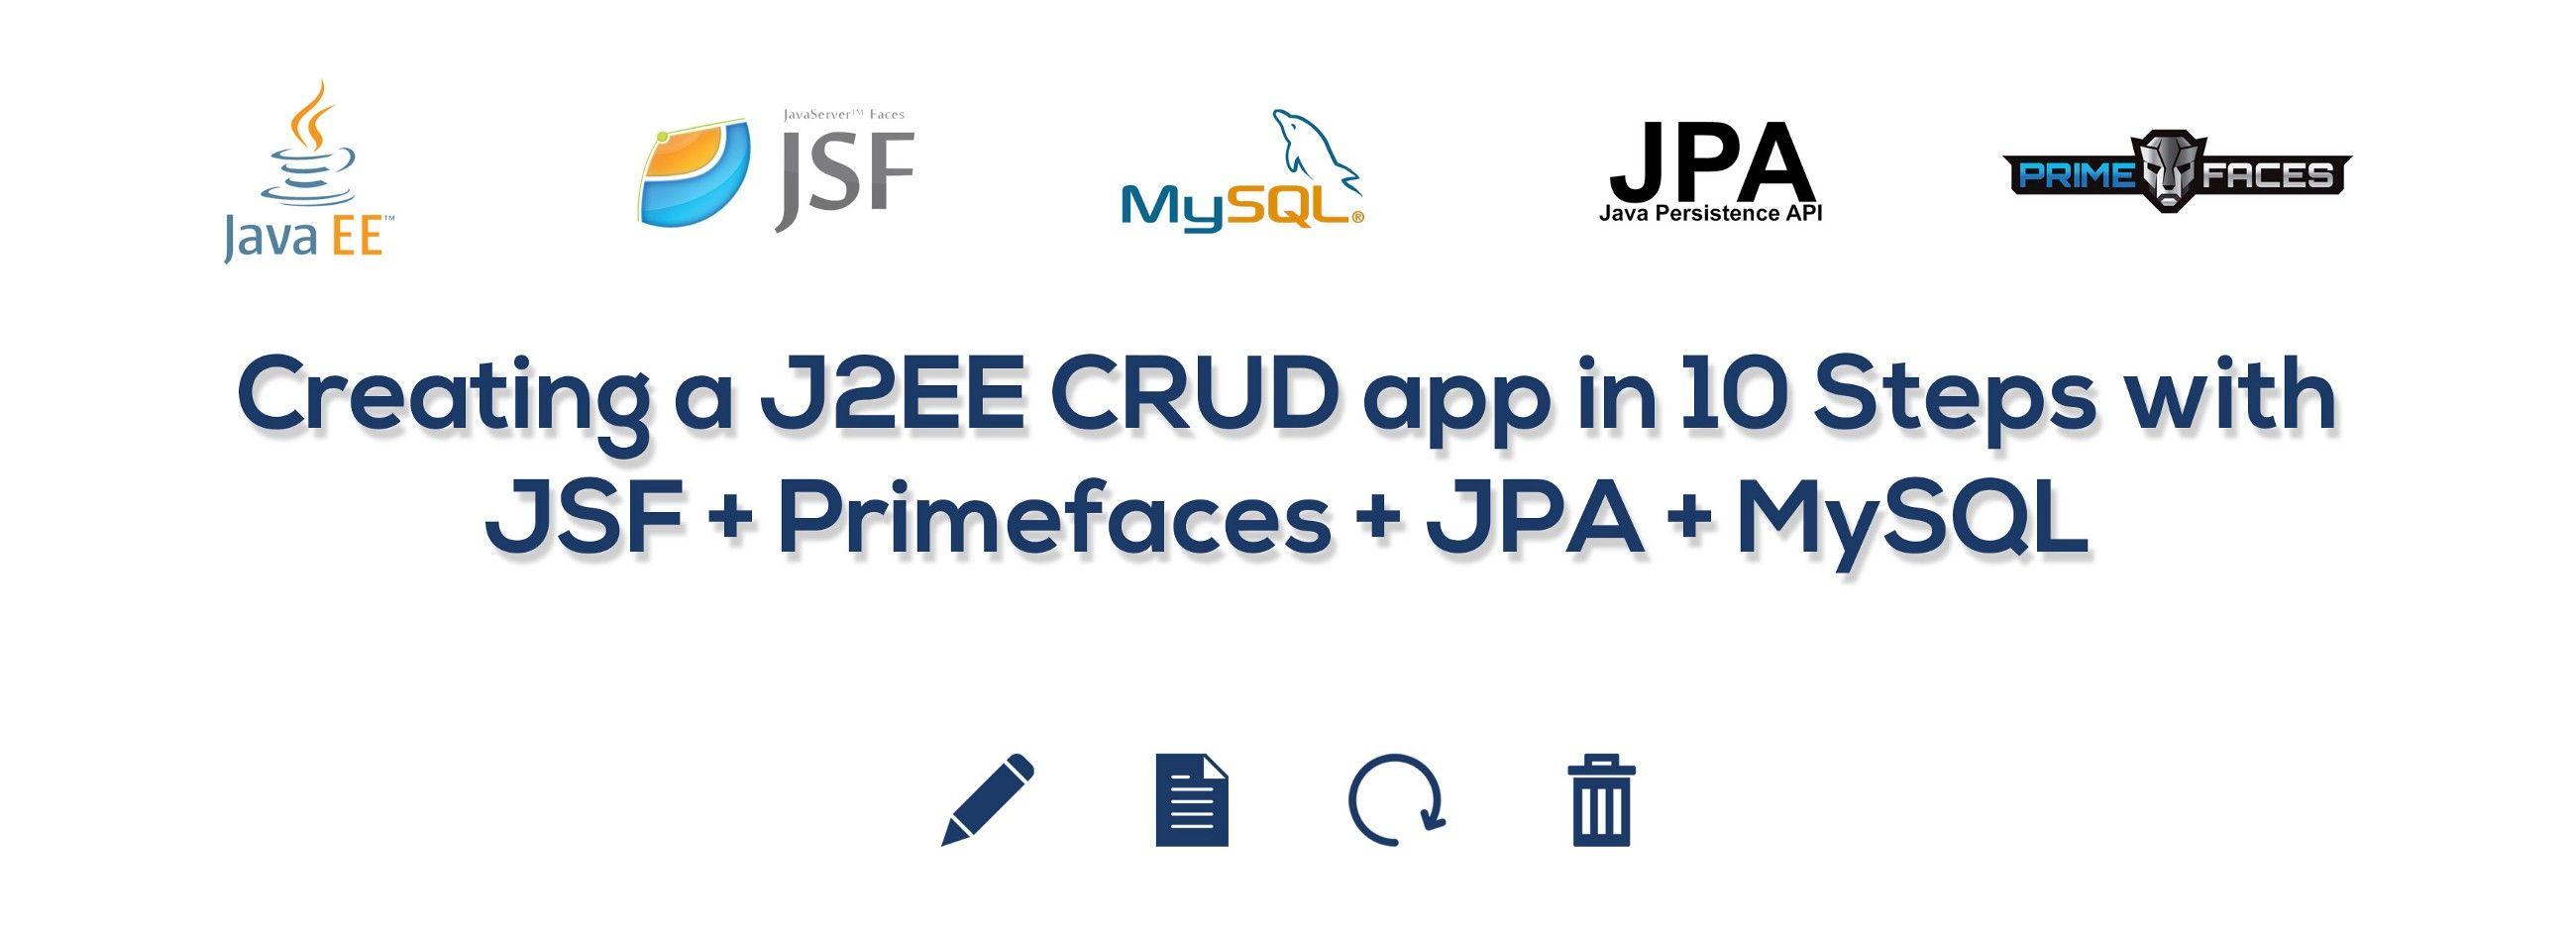 Crud Logo - Creating a J2EE CRUD app in 10 Steps with JSF + Primefaces + JPA +